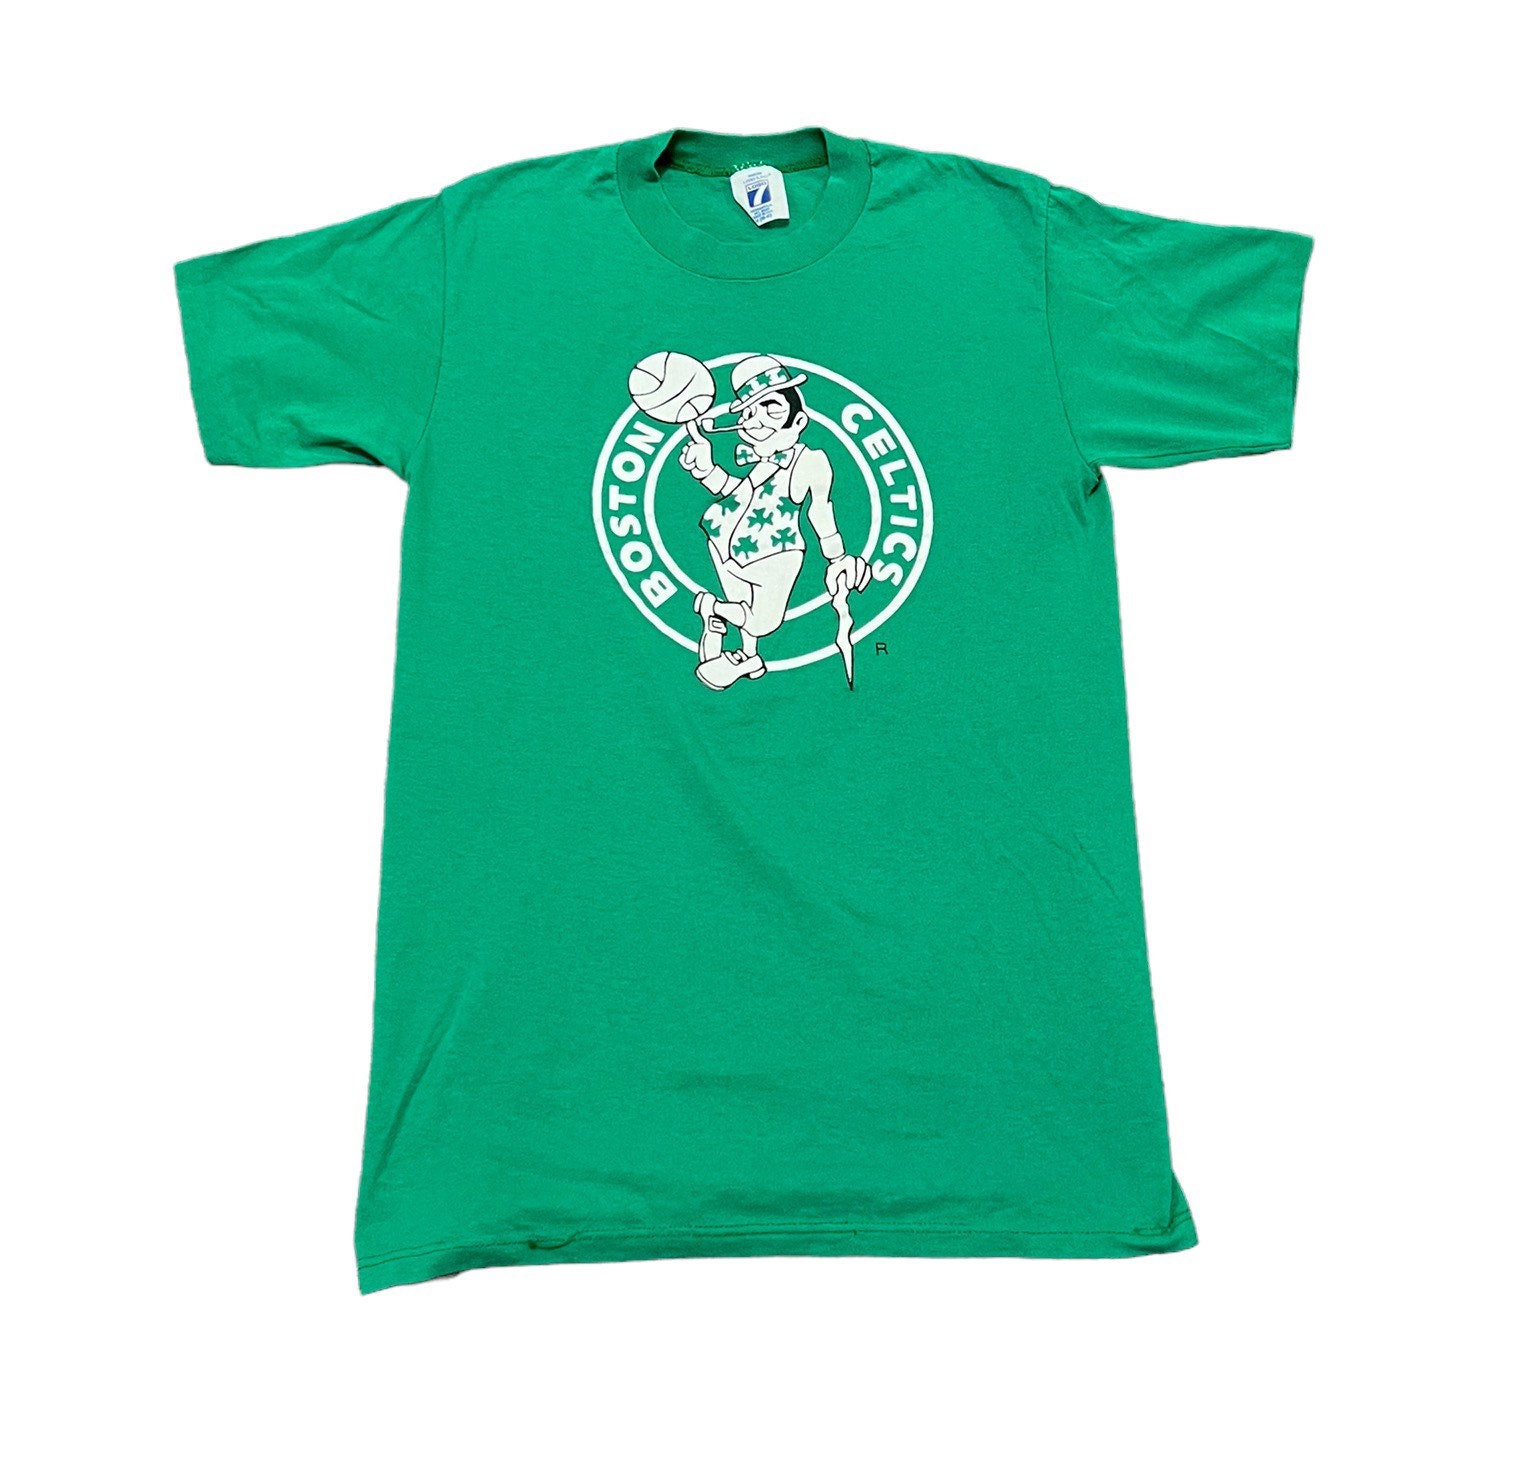 Tommy Hilfiger Womens Boston Celtics Jersey Tank Dress, Green, Small